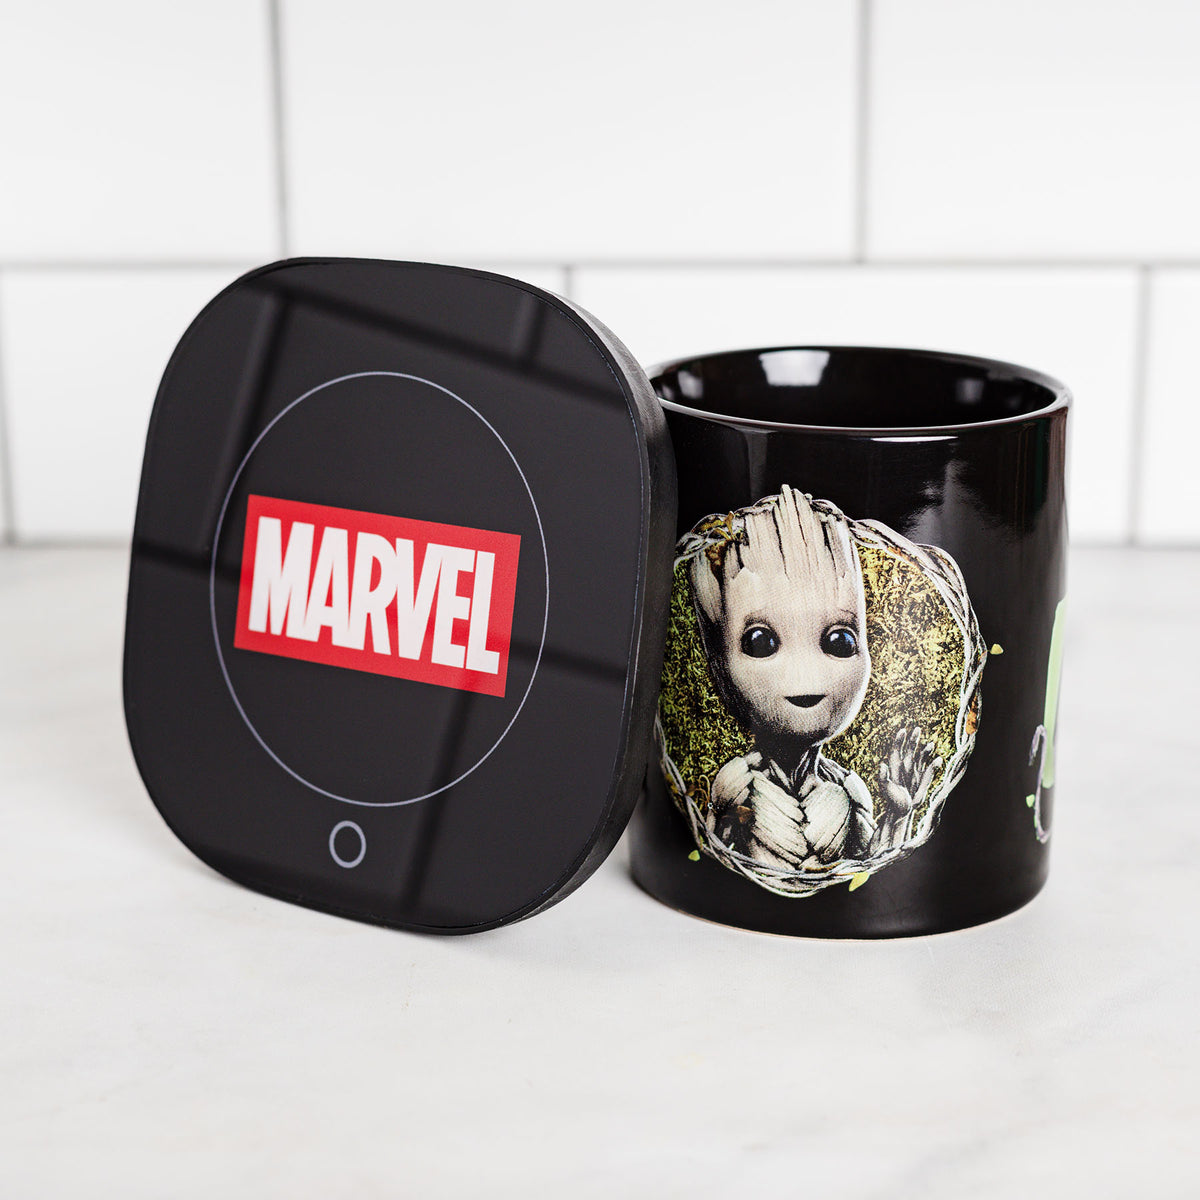 Uncanny Brands Marvel's She Hulk Mug Warmer with Mug